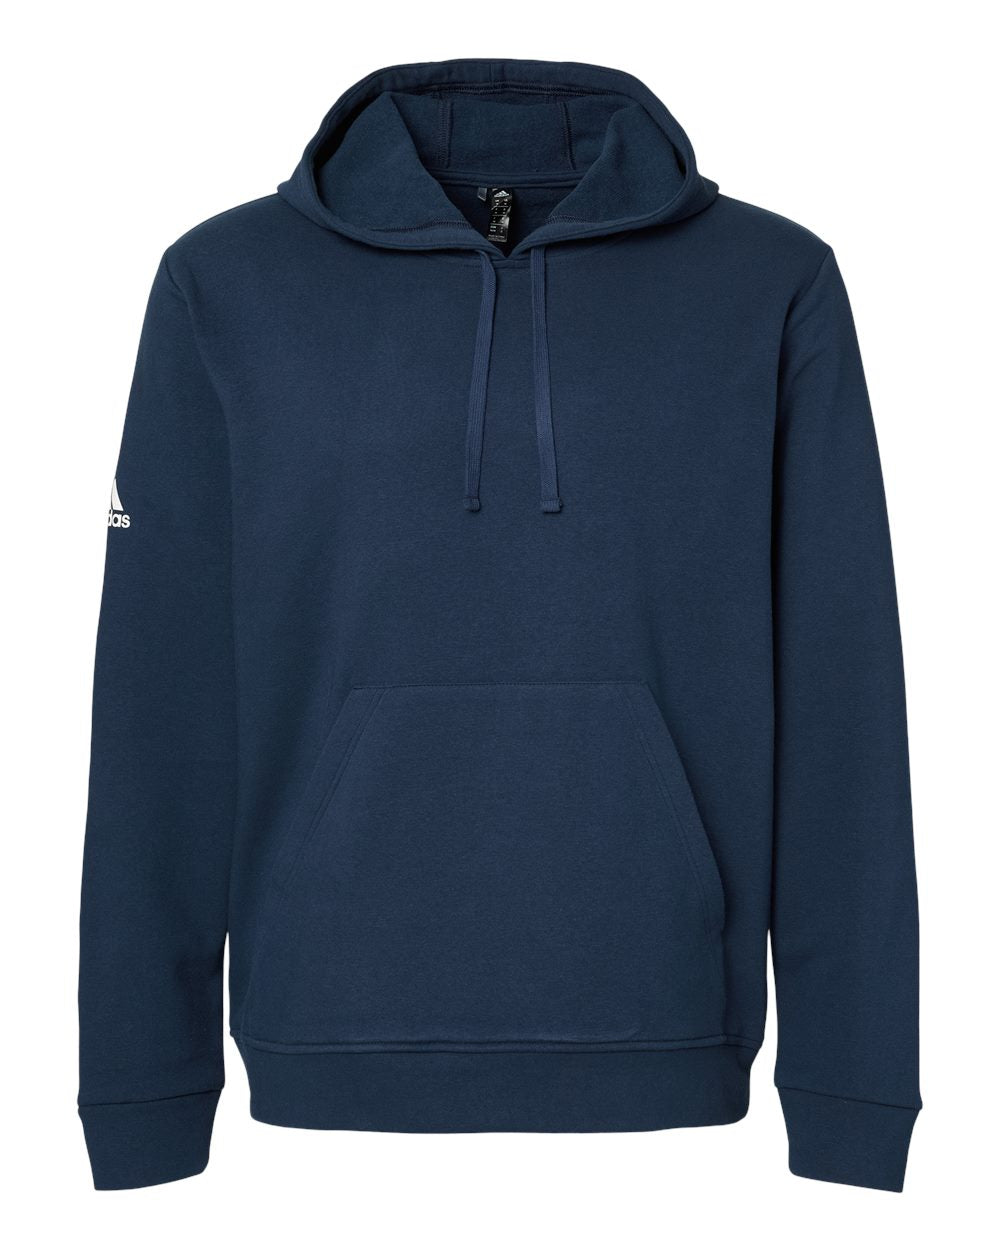 Adidas A432 Fleece Hooded Sweatshirt #color_Collegiate Navy